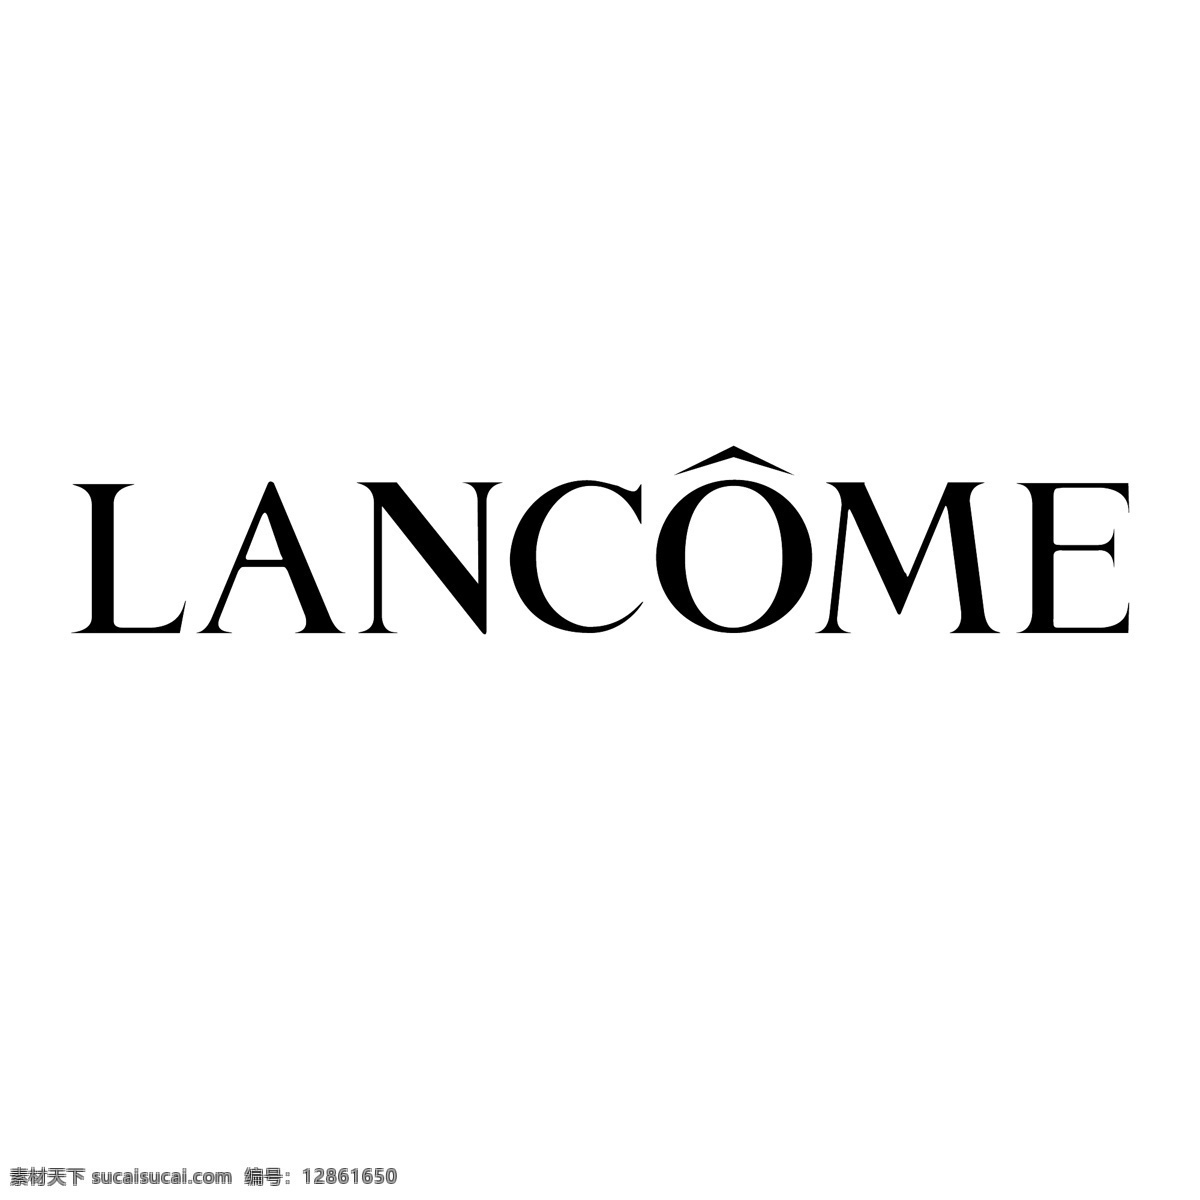 兰蔻 logo 兰蔻logo lancome lancomelogo 美妆logo 标志图标 公共标识标志